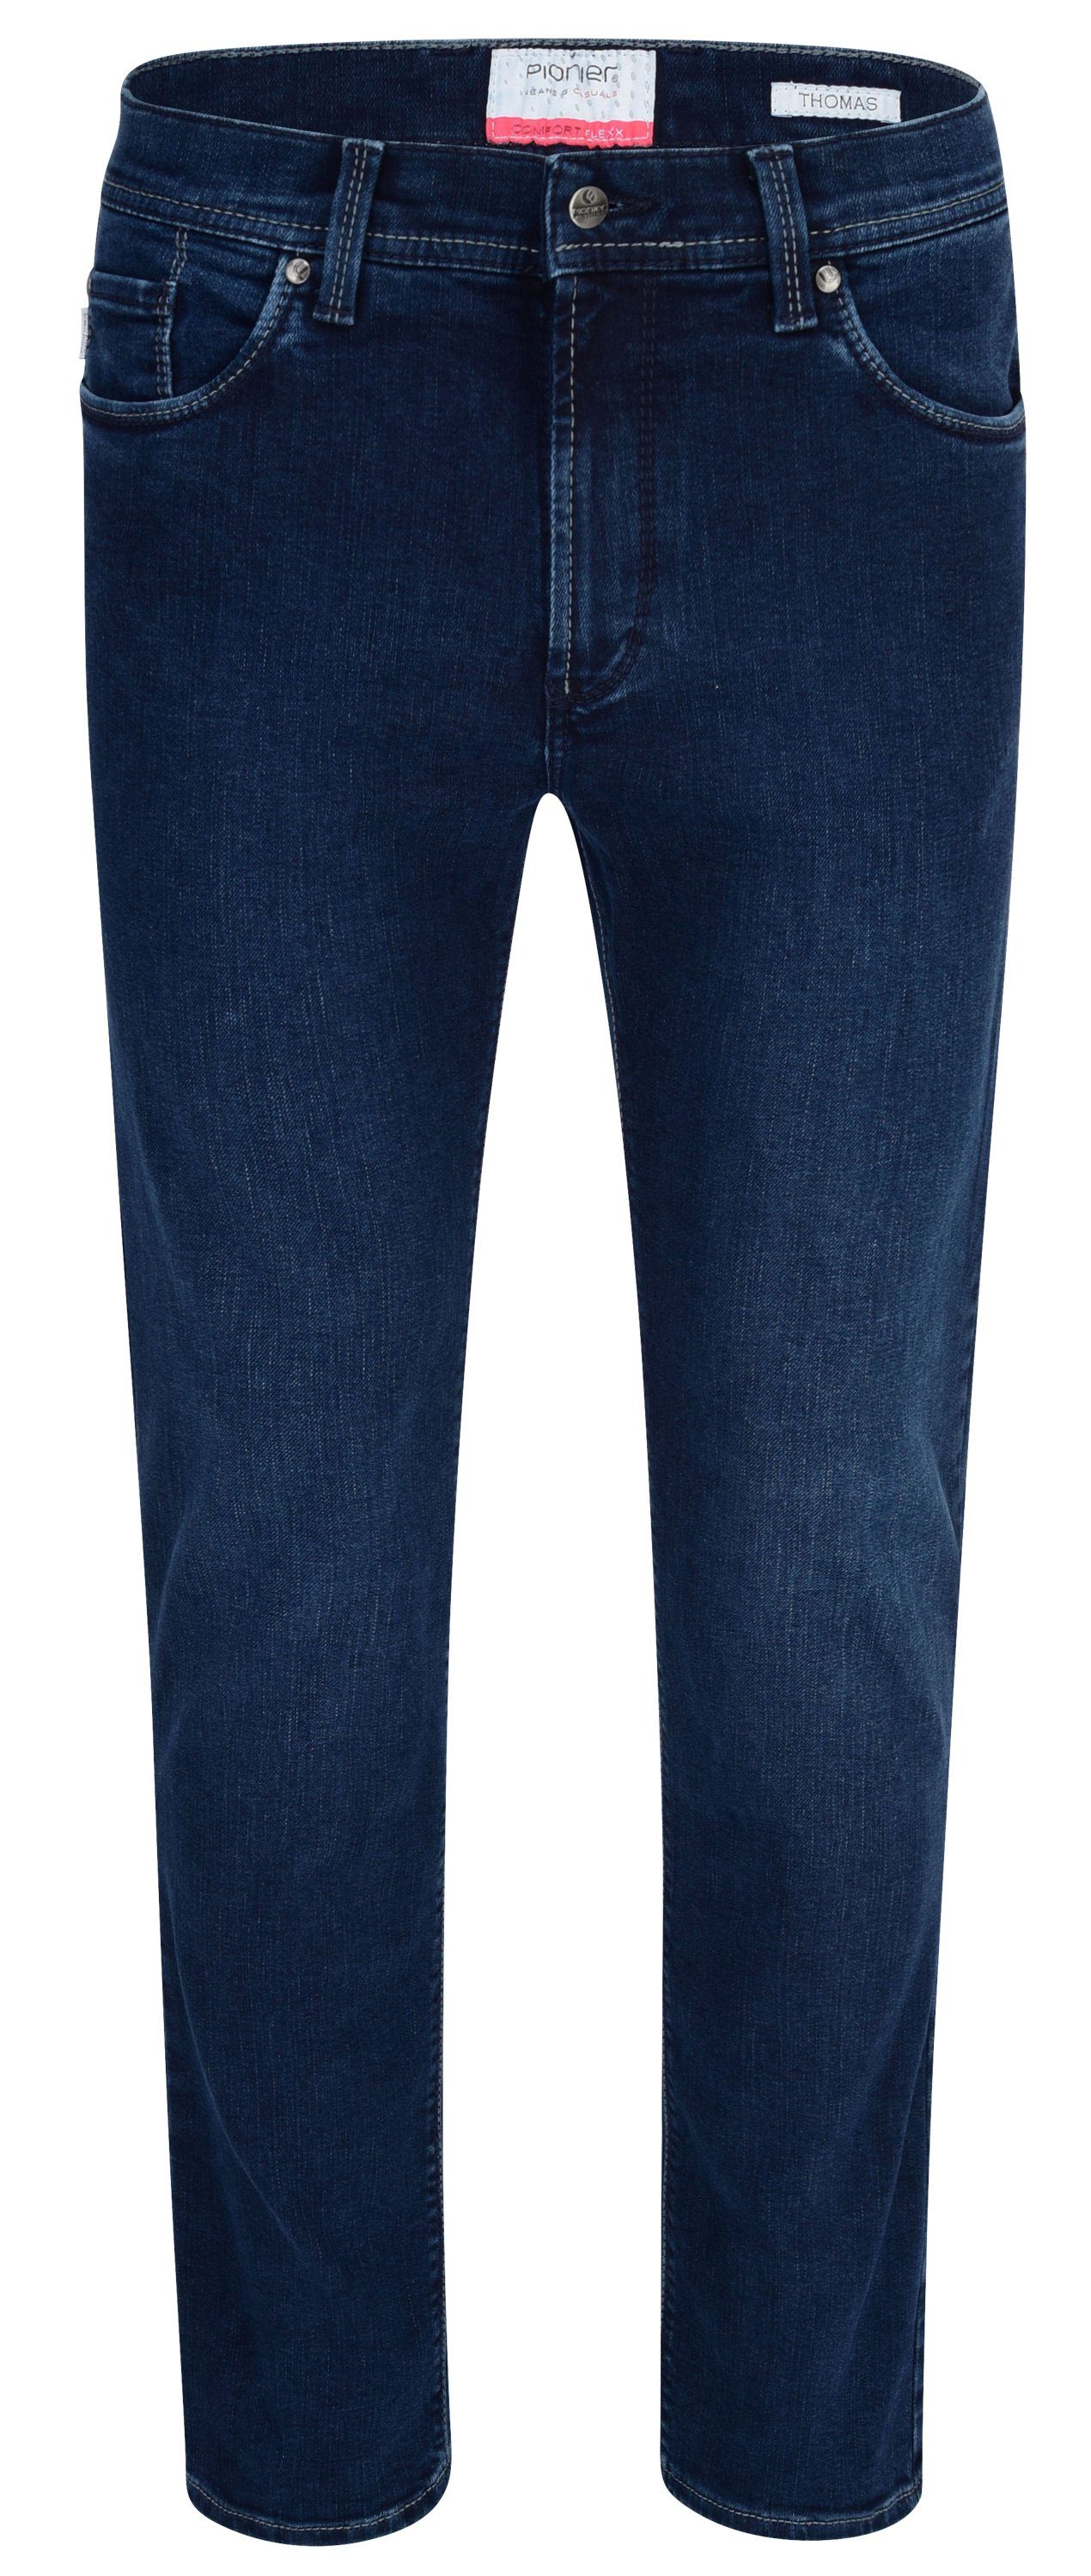 Pionier 5-Pocket-Jeans PIONIER THOMAS 6192.165 2079 midnight blue